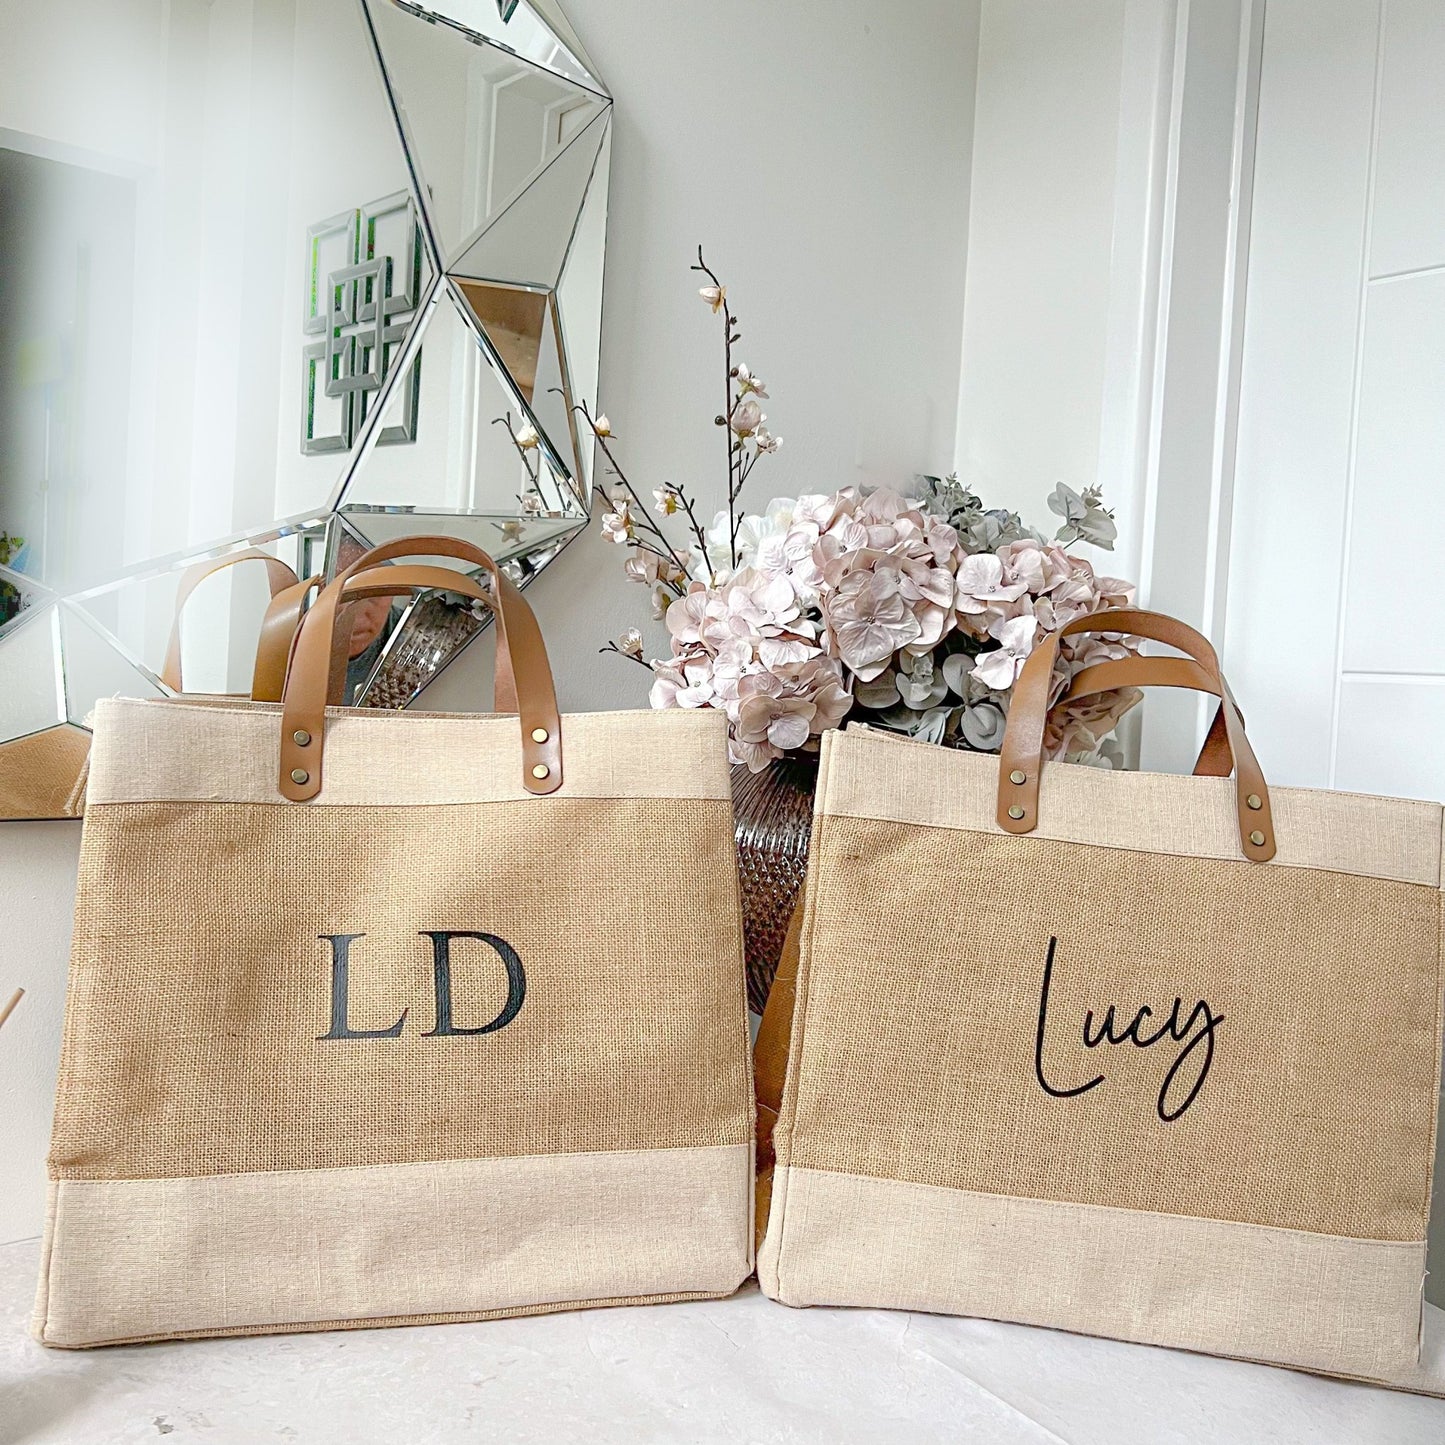 Personalised Large Jute Bag Leather Handle Shopper Beach Bag - OLIVIA AND GRAY LTD